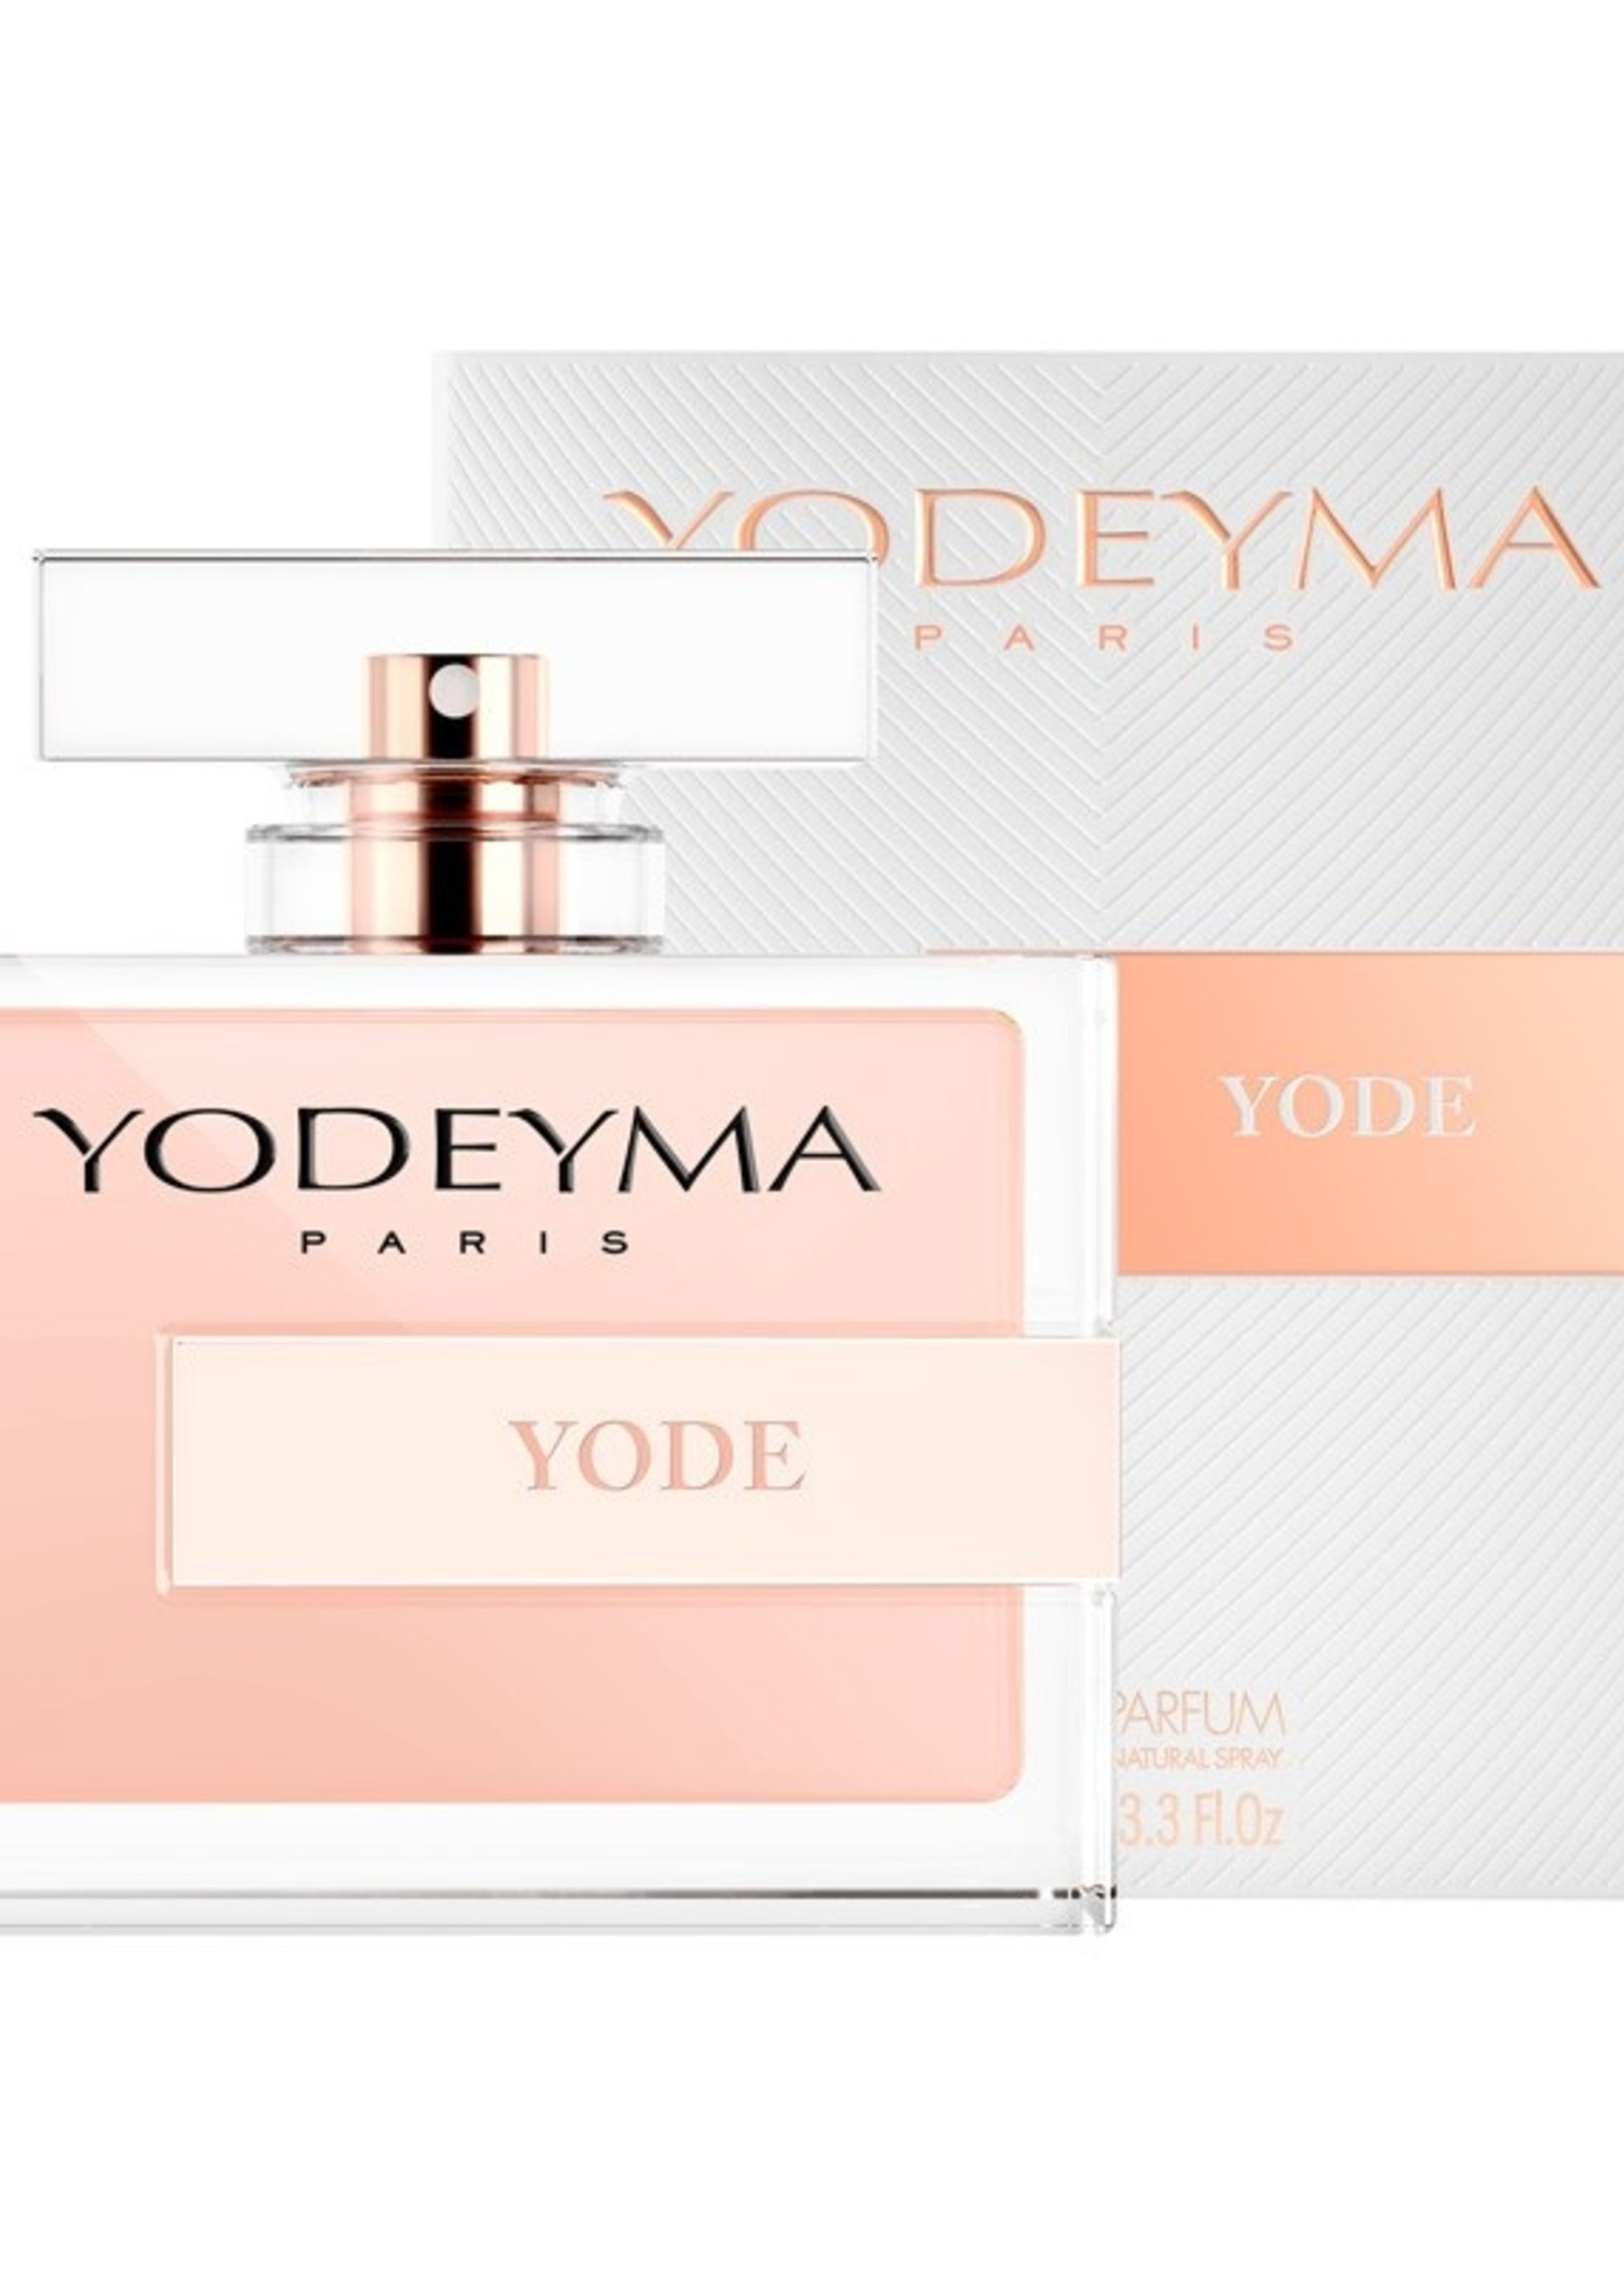 Yodeyma Parfums YODE Eau de Parfum 100 ml.